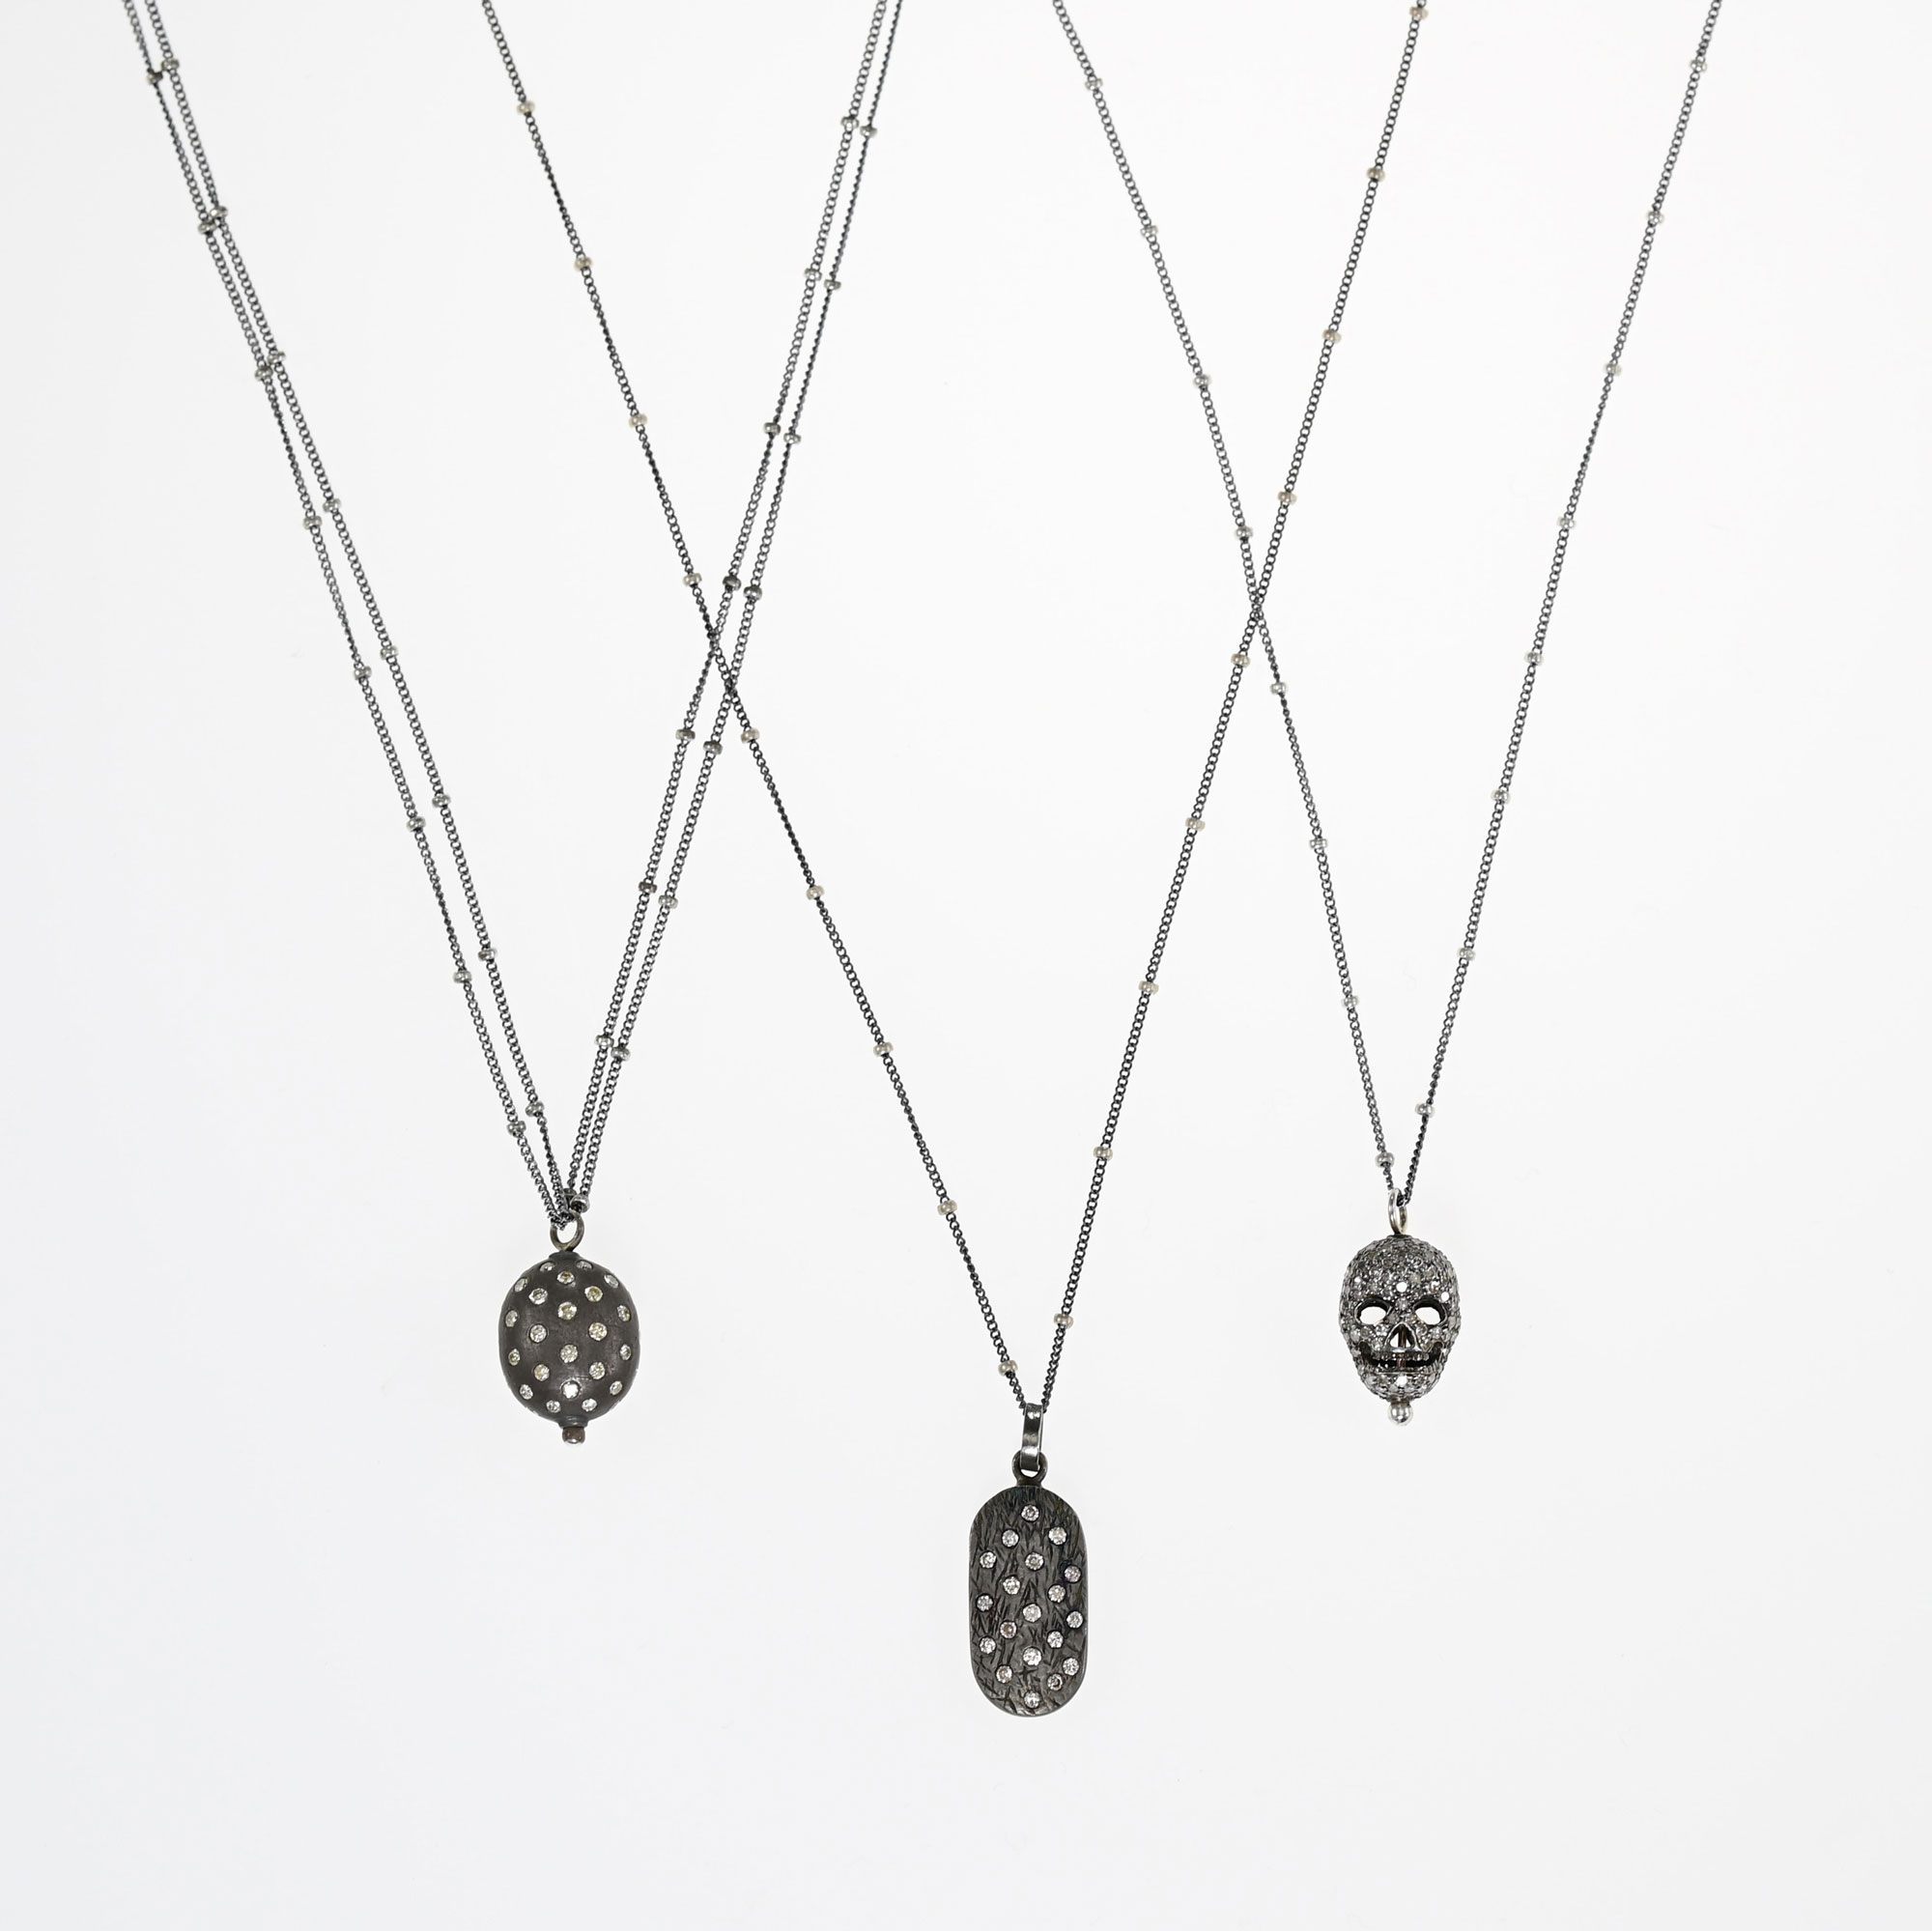 Edgy Diamond pendant necklaces,delicate chain,skull & tag